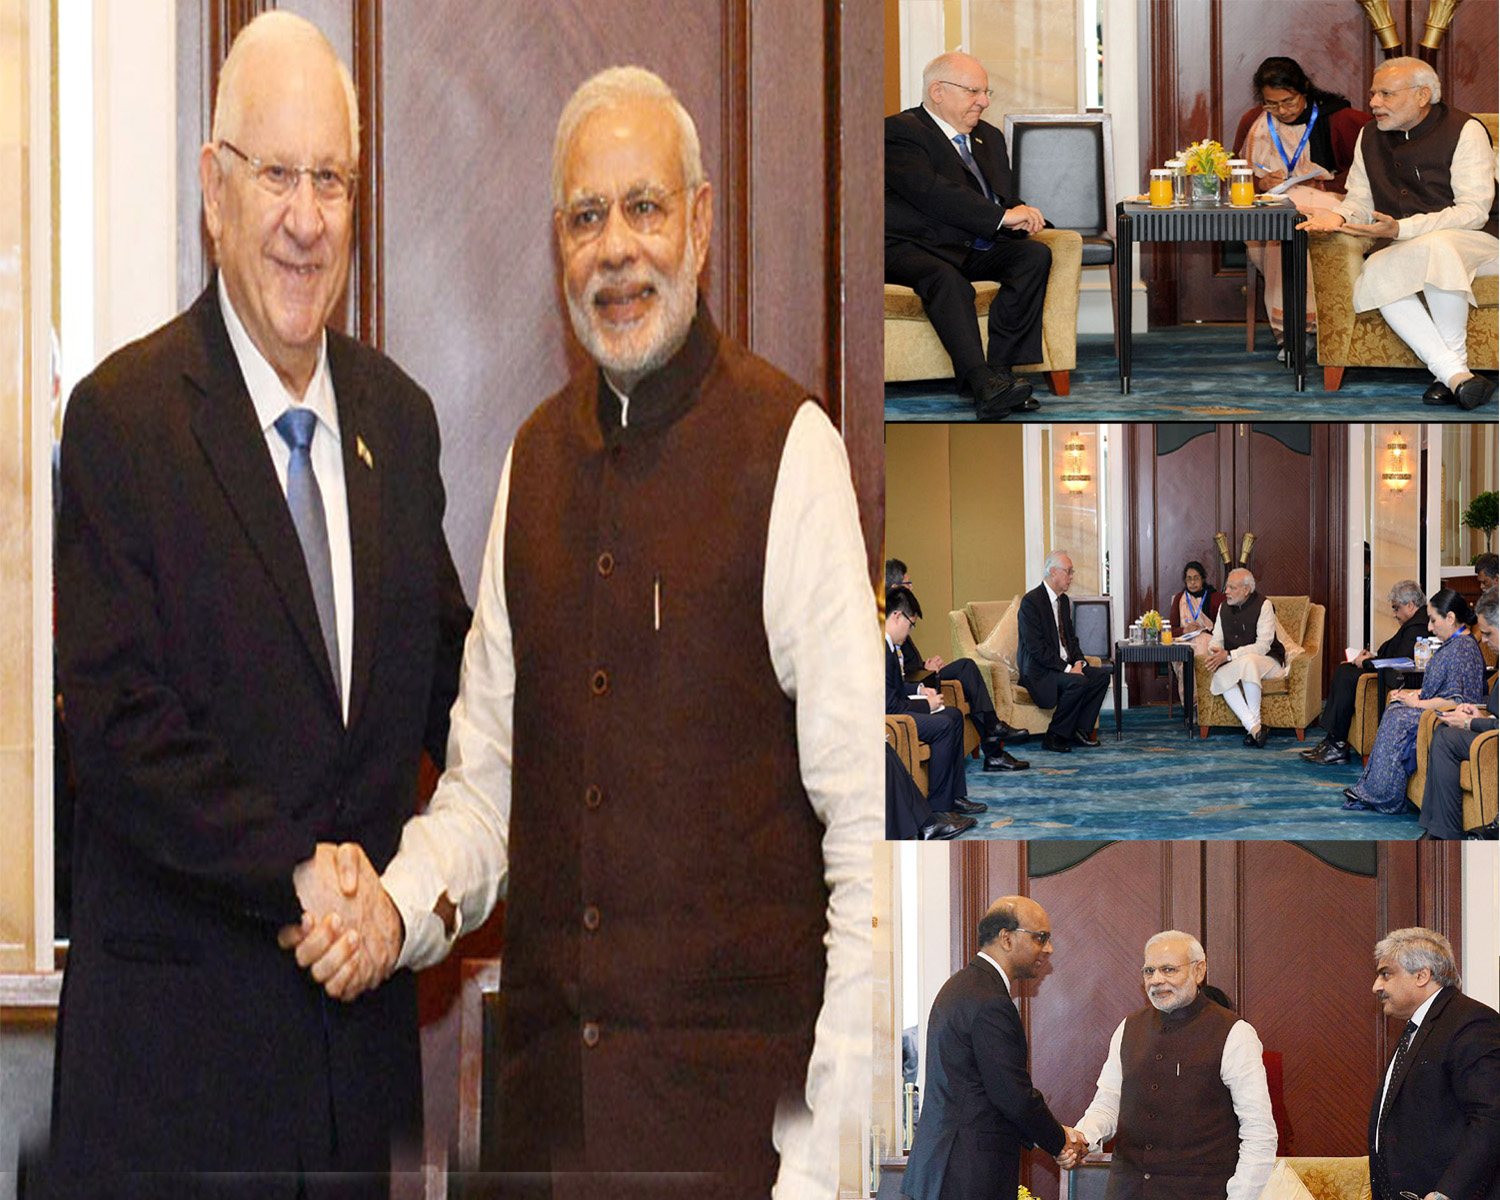 PM meets Deputy PM & Emeritus Senior Minister of Singapore,